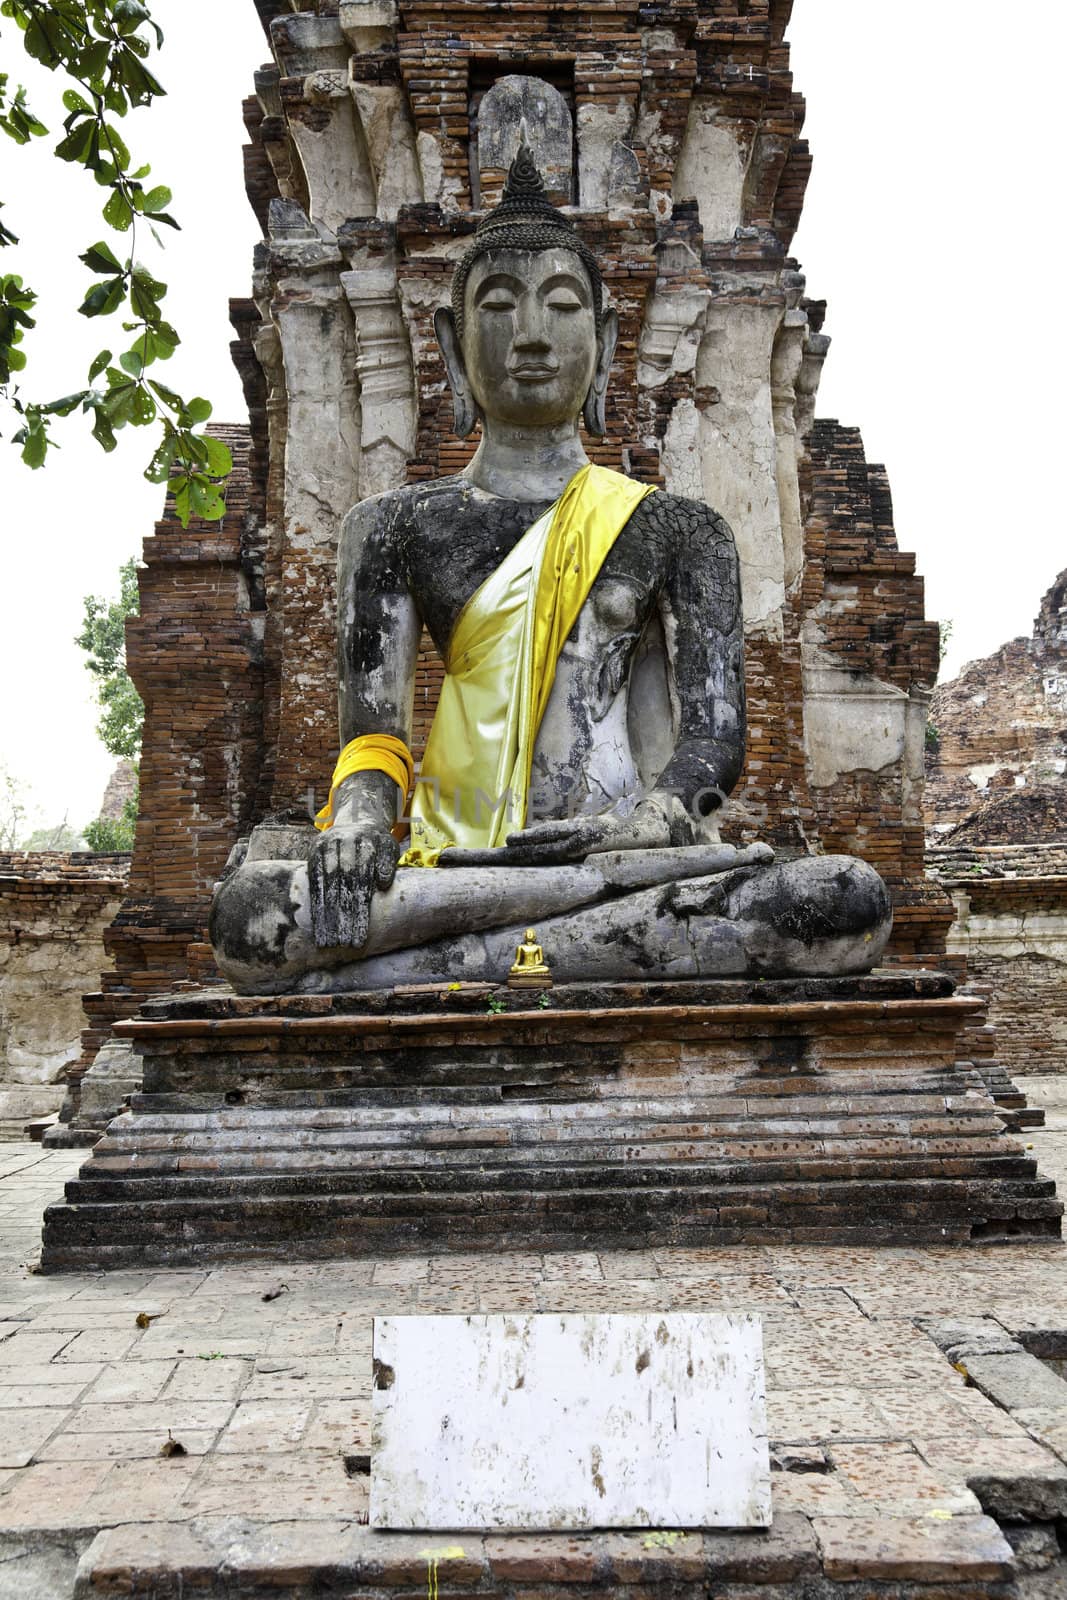 ancient seated buddha image by takepicsforfun